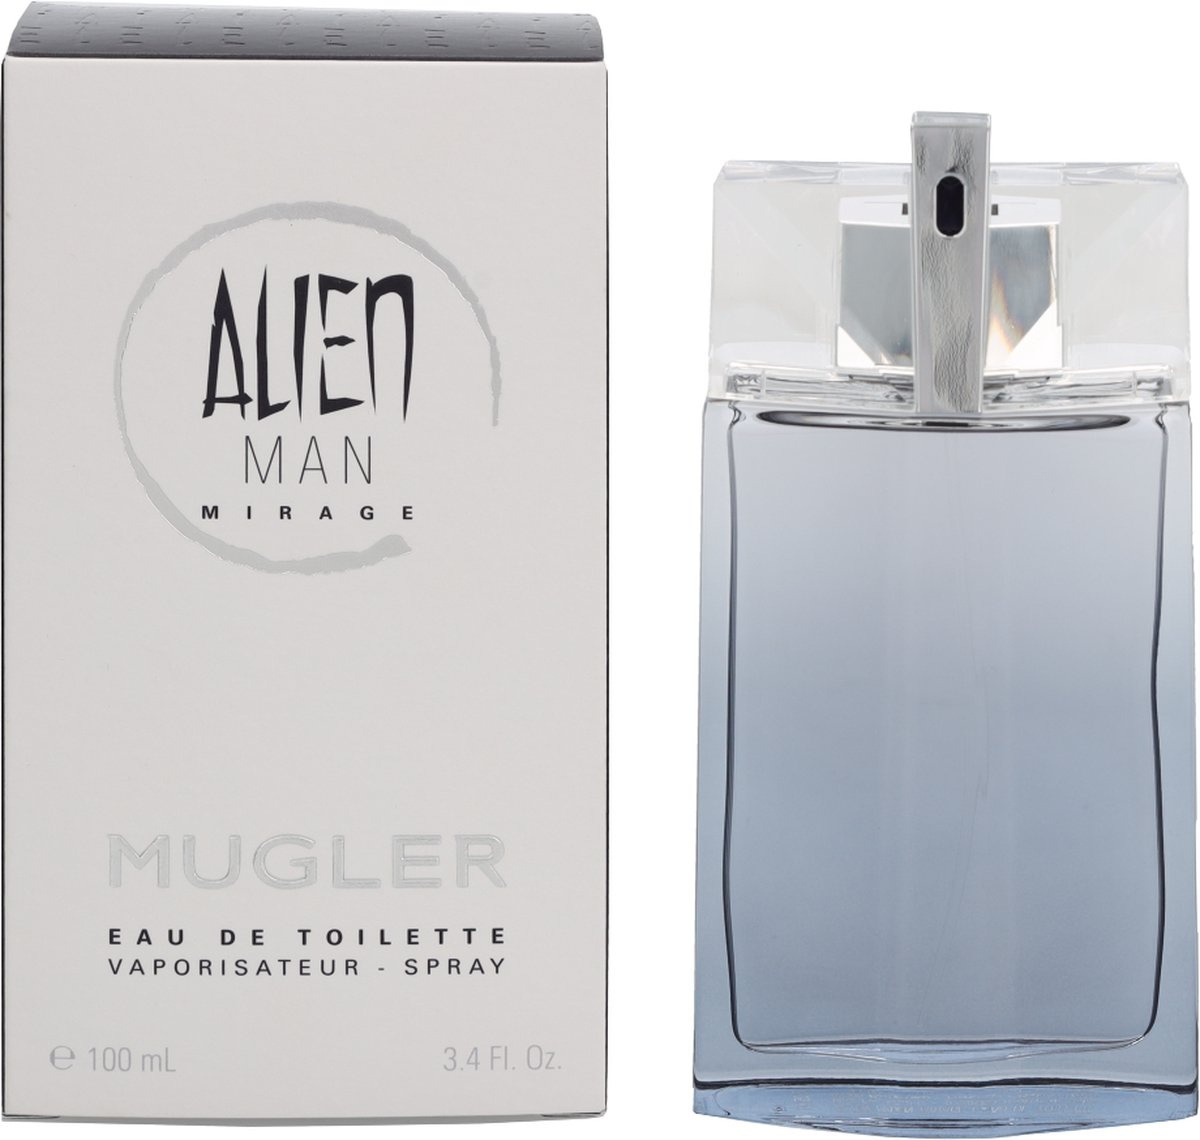 Thierry Mugler Alien Man Mirage 100 ml Eau de Toilette - Men's perfume